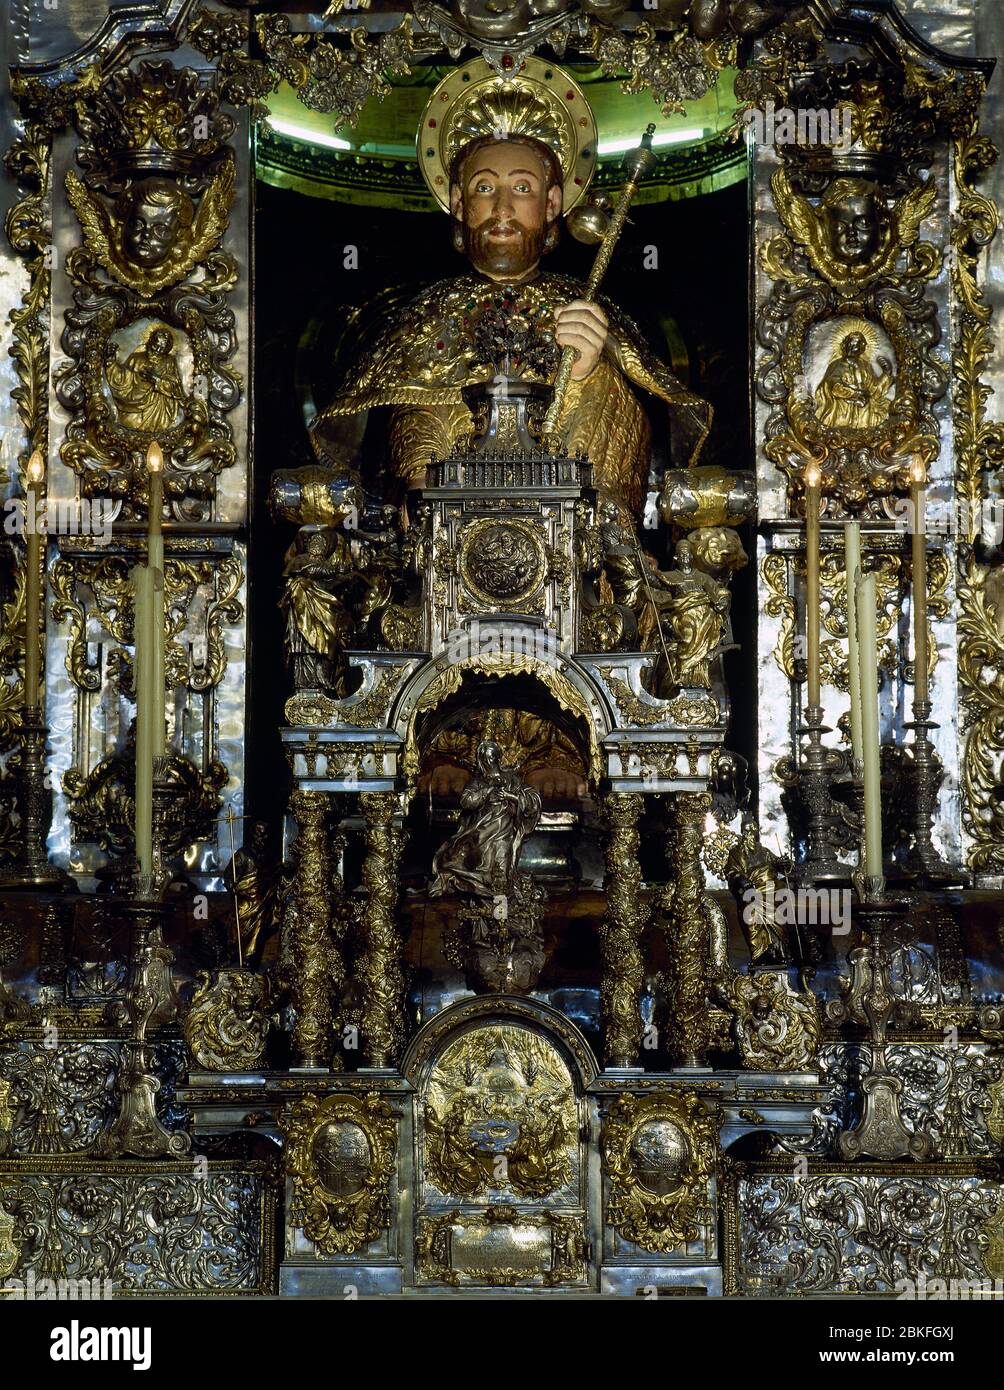 Spain. Galicia. Cathedral of Santiago de Compostela. Main altar, detail. Statue of saint James. 12th century. Stock Photo